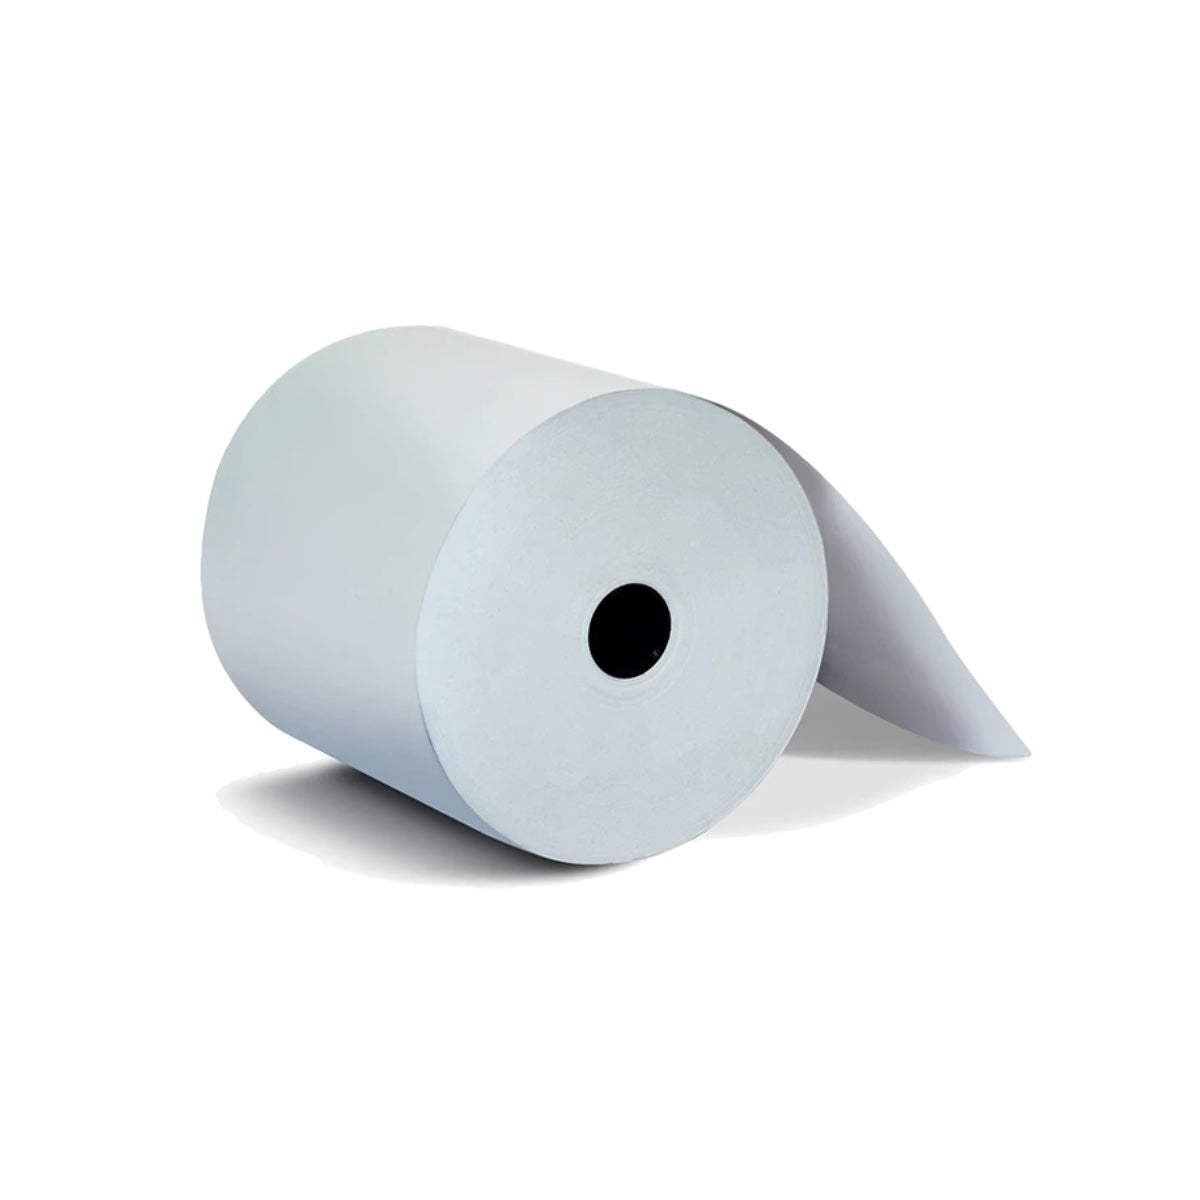 EMIGO Thermal Cash Roll, 80 x 80 mm x 0.5 inch, 55gsm, 2/pack, White